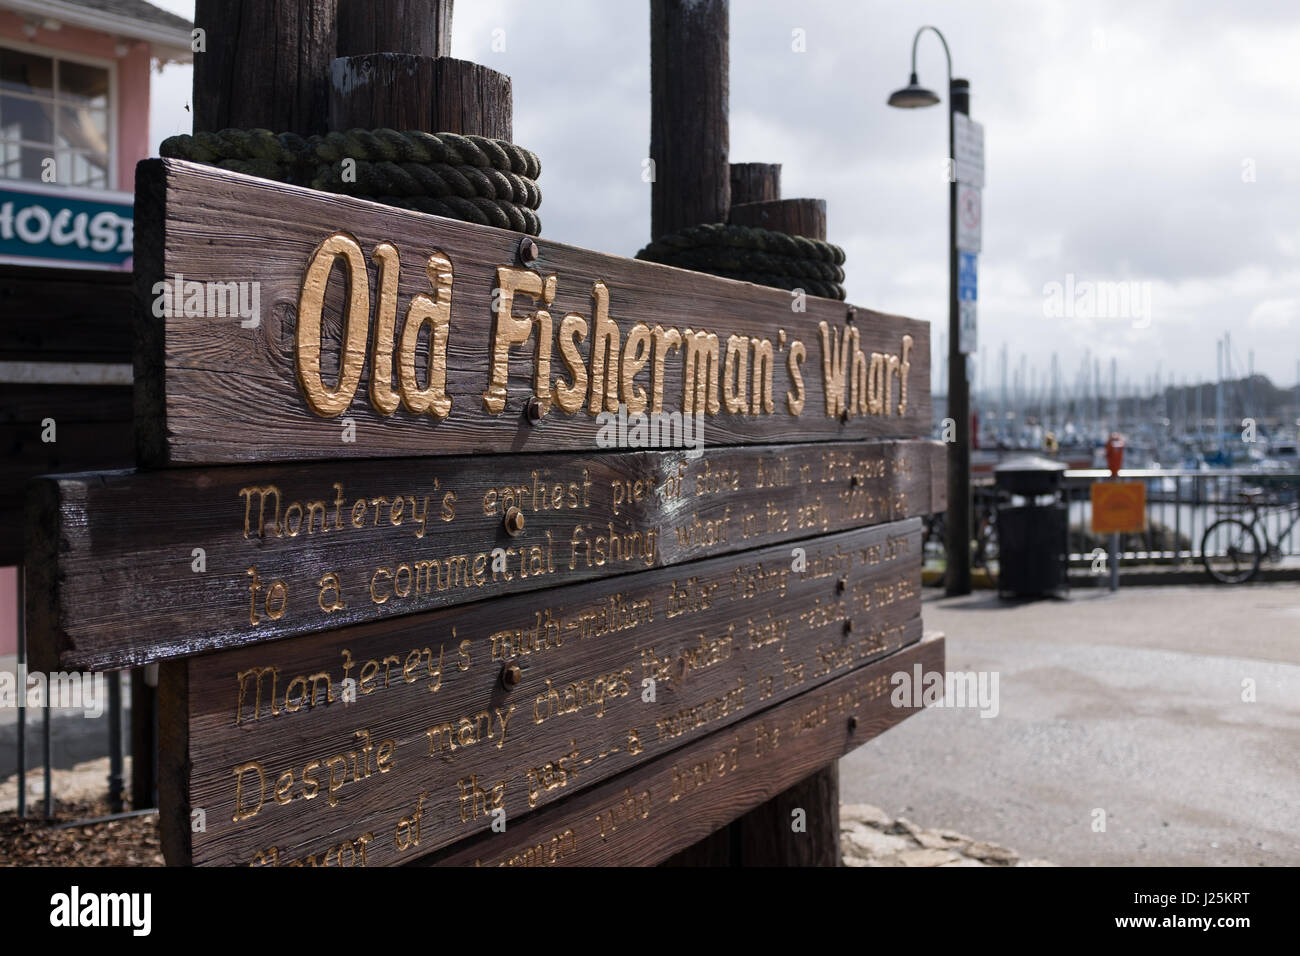 Old Fisherman's Wharf, Monterey, California Stock Photo